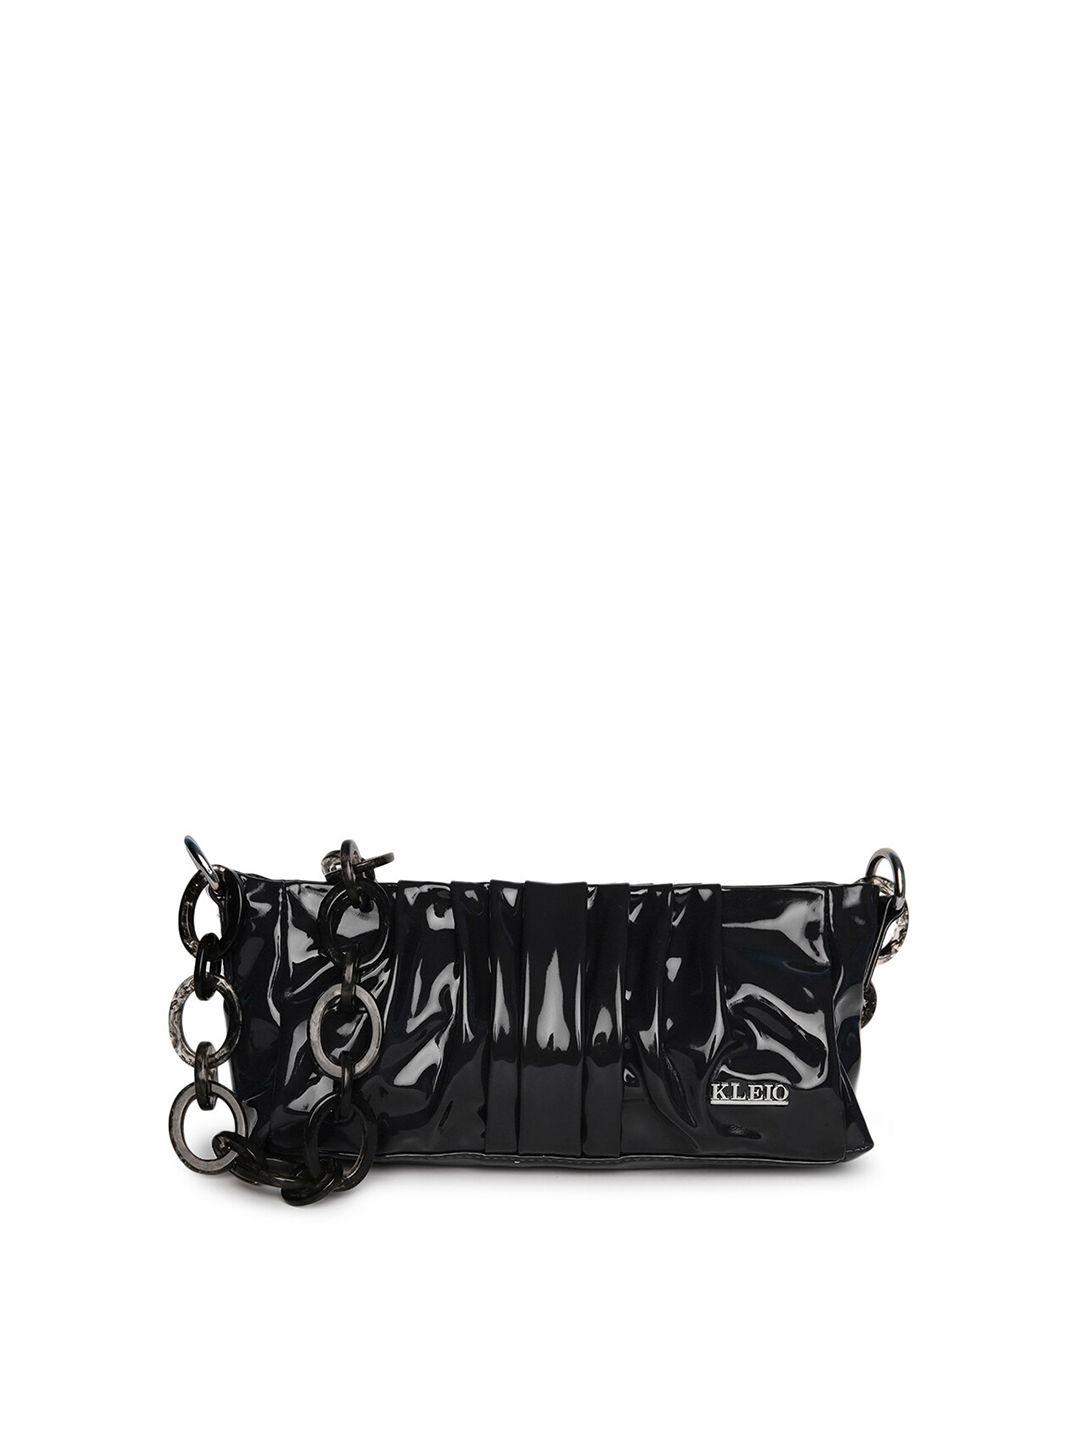 kleio black pu structured sling bag